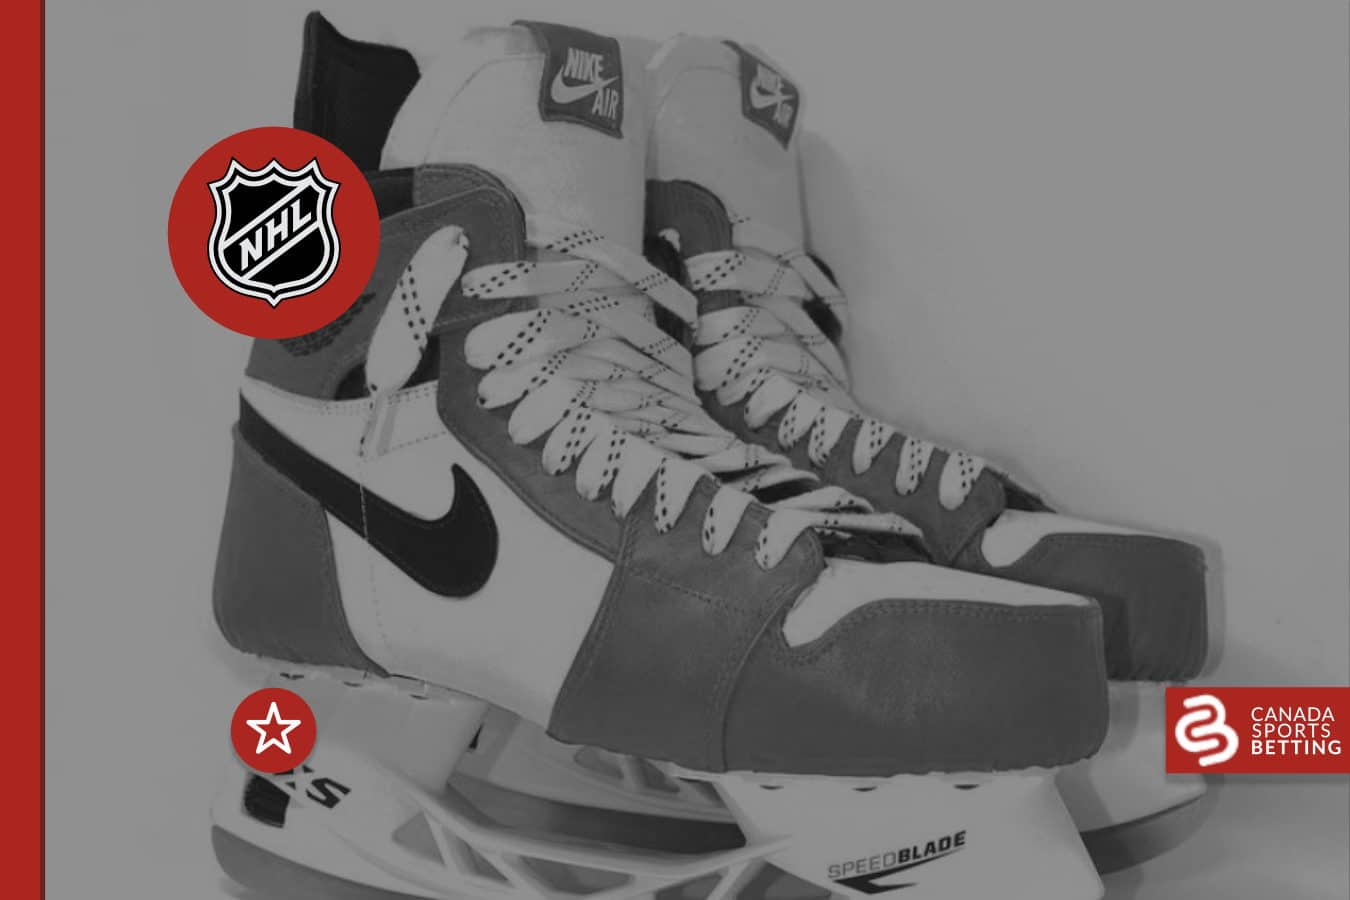 Air Jordan on Ice: Air Jordan 1's turned into hockey skates